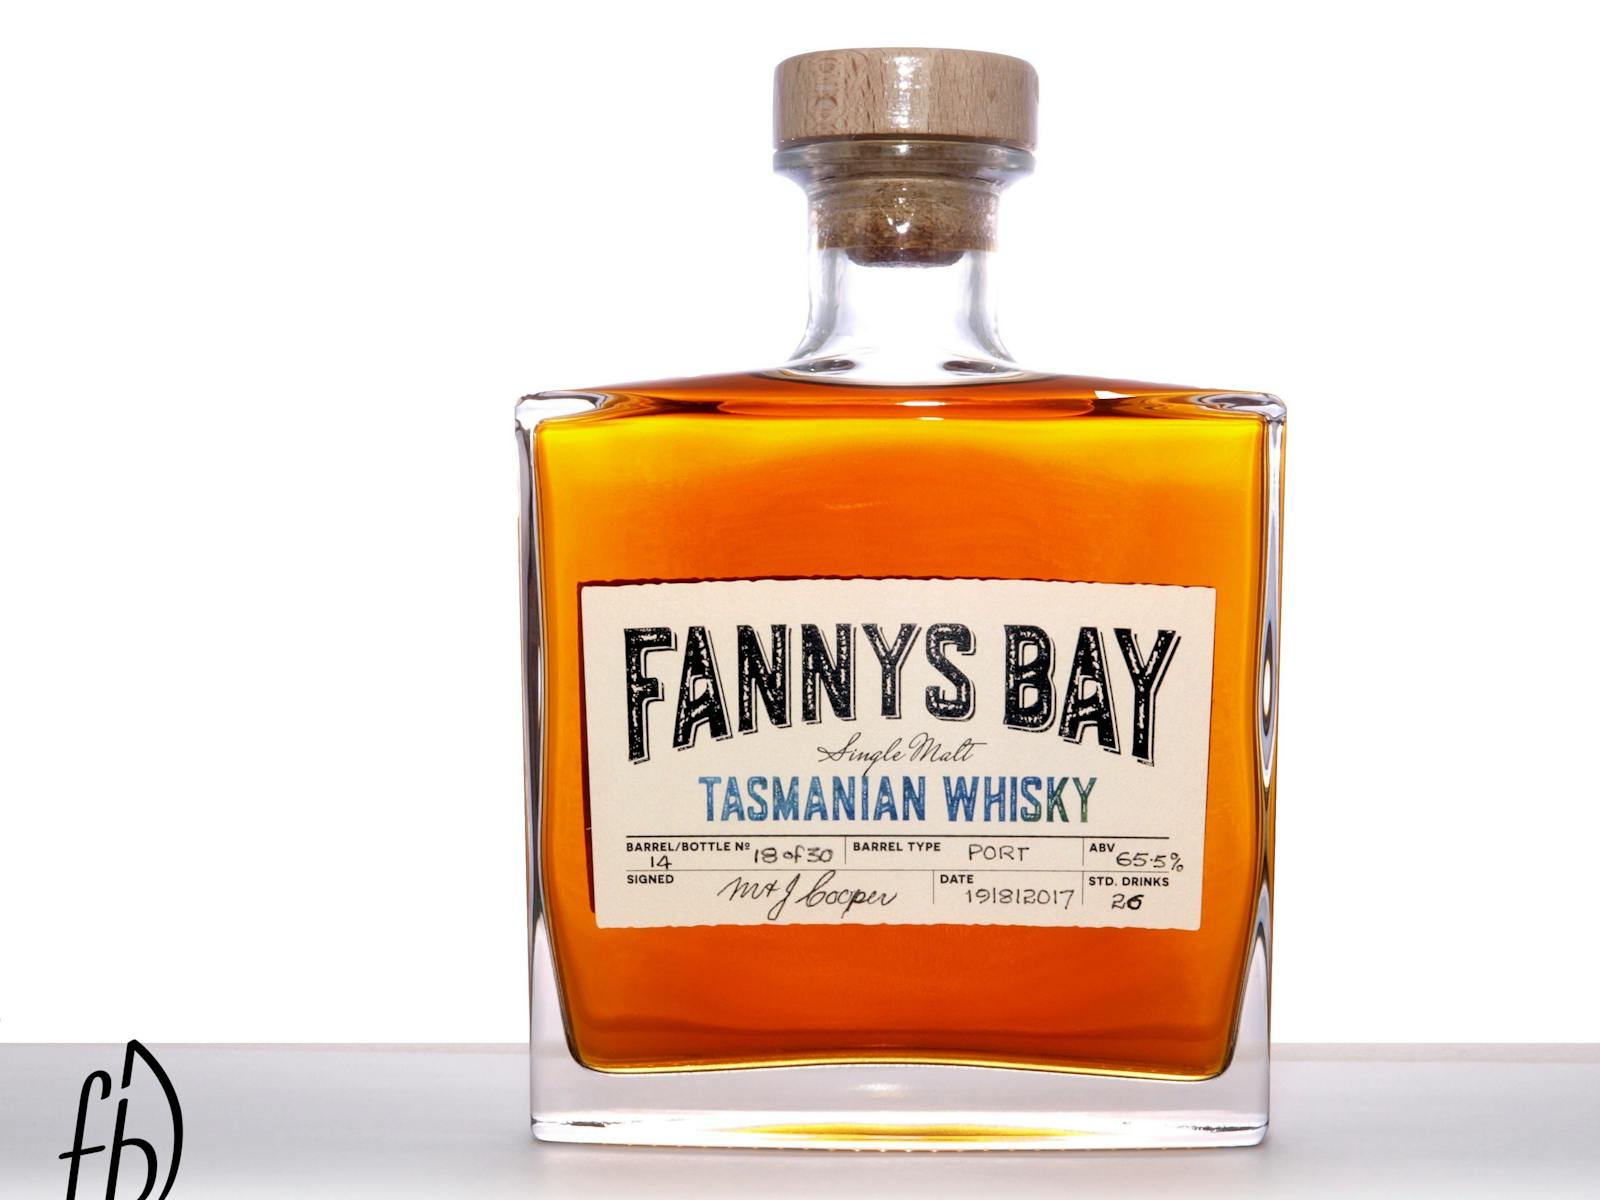 A beautiful bottle of Fannys Bay Tasmanian Single Malt Whisky